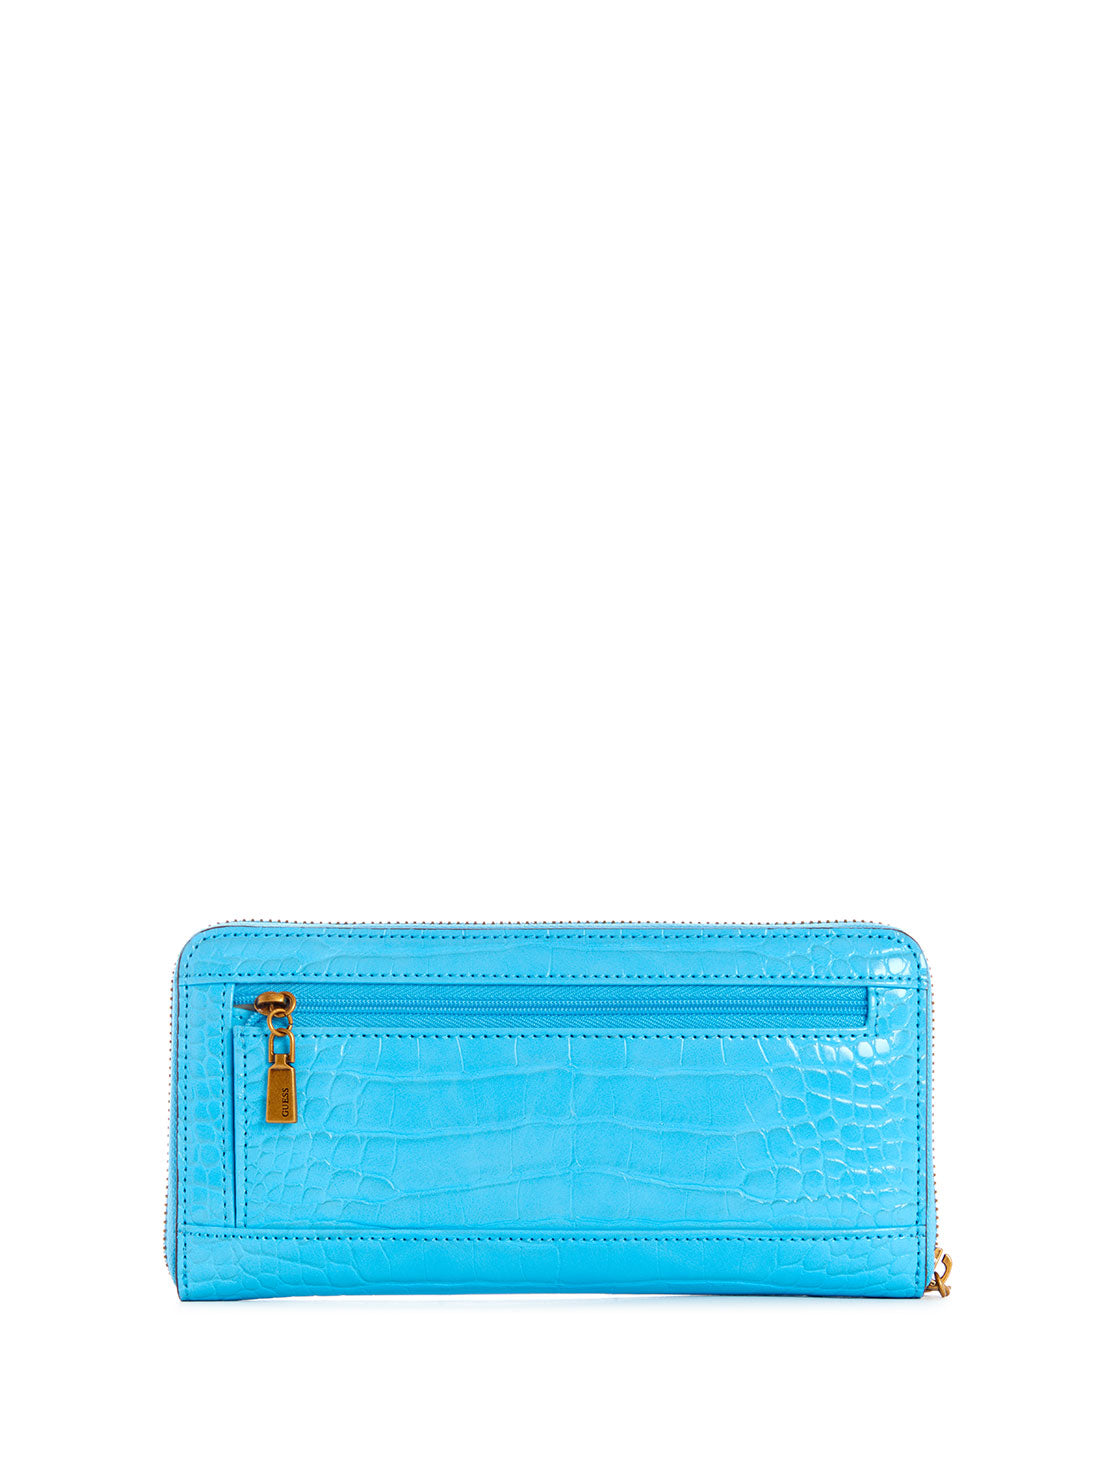 Blue Laurel Croco Large Wallet